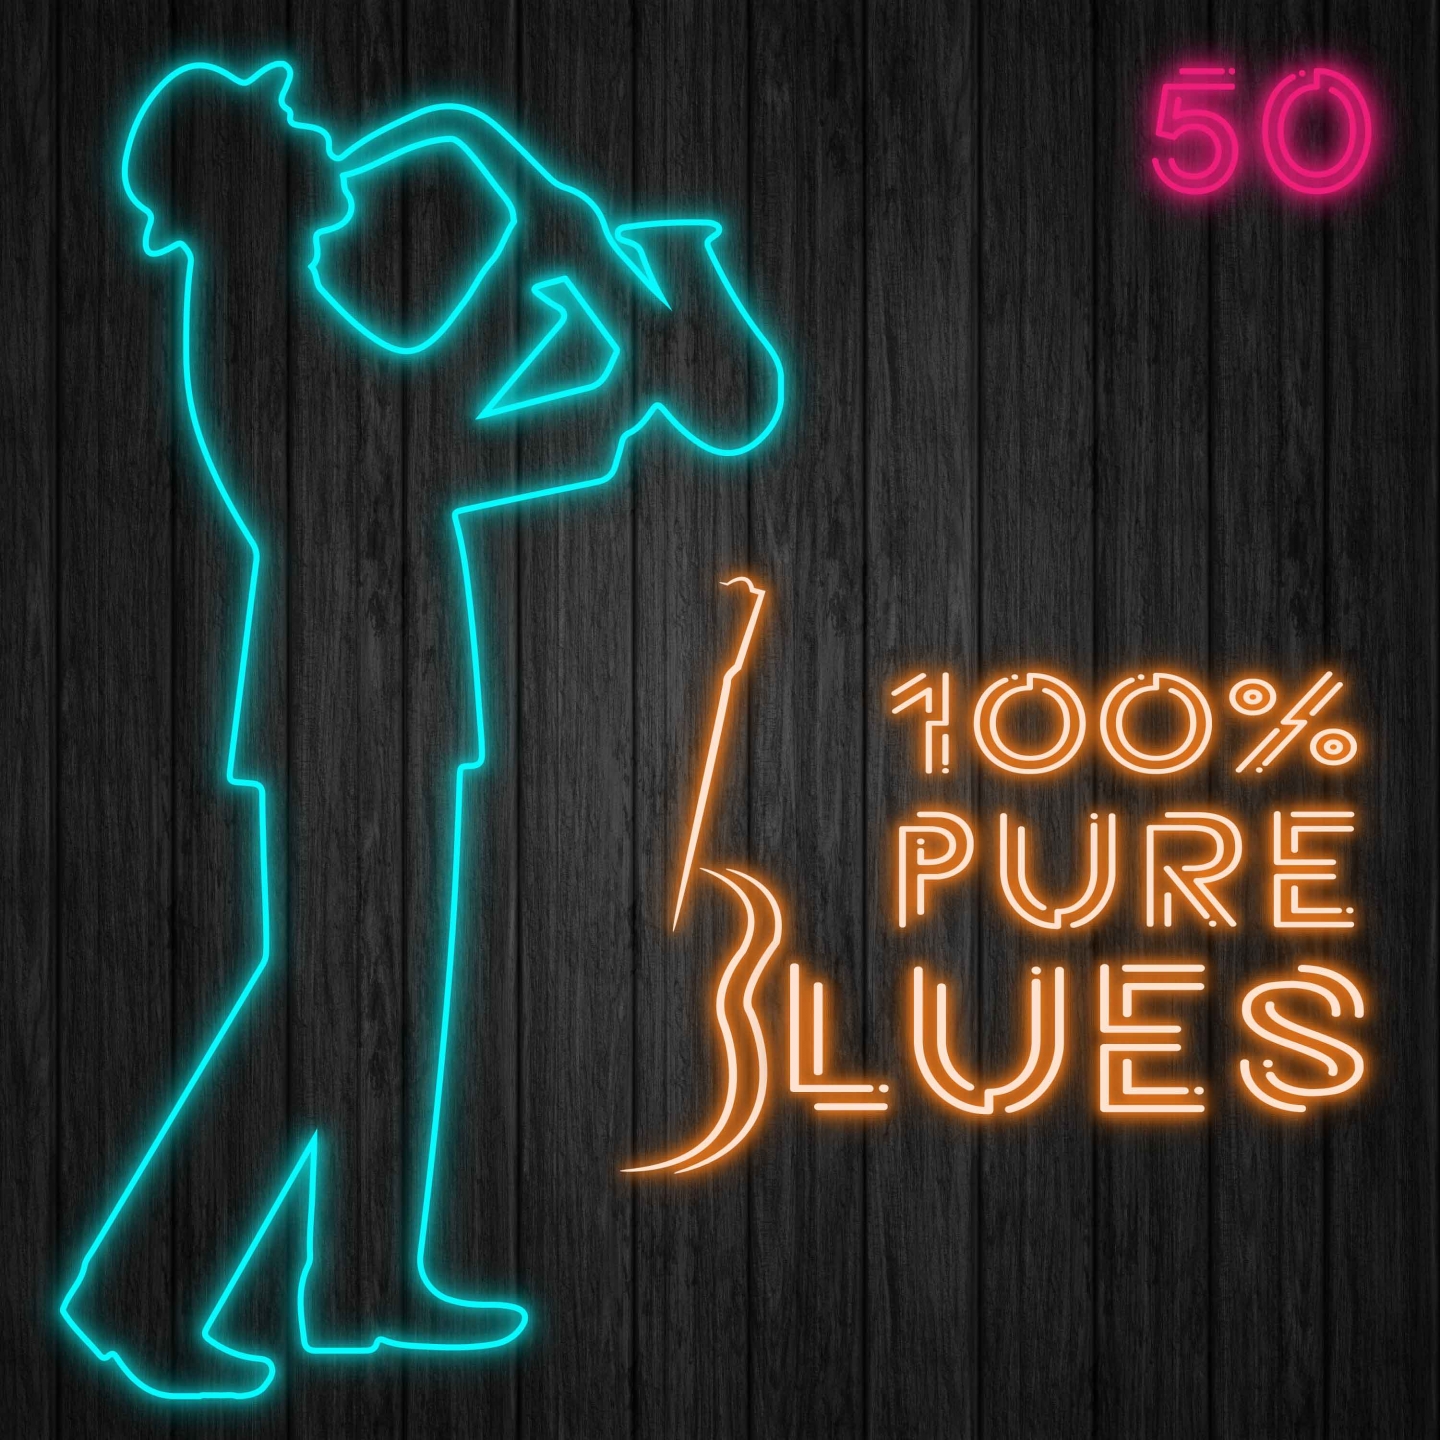 100% Pure Blues / 50